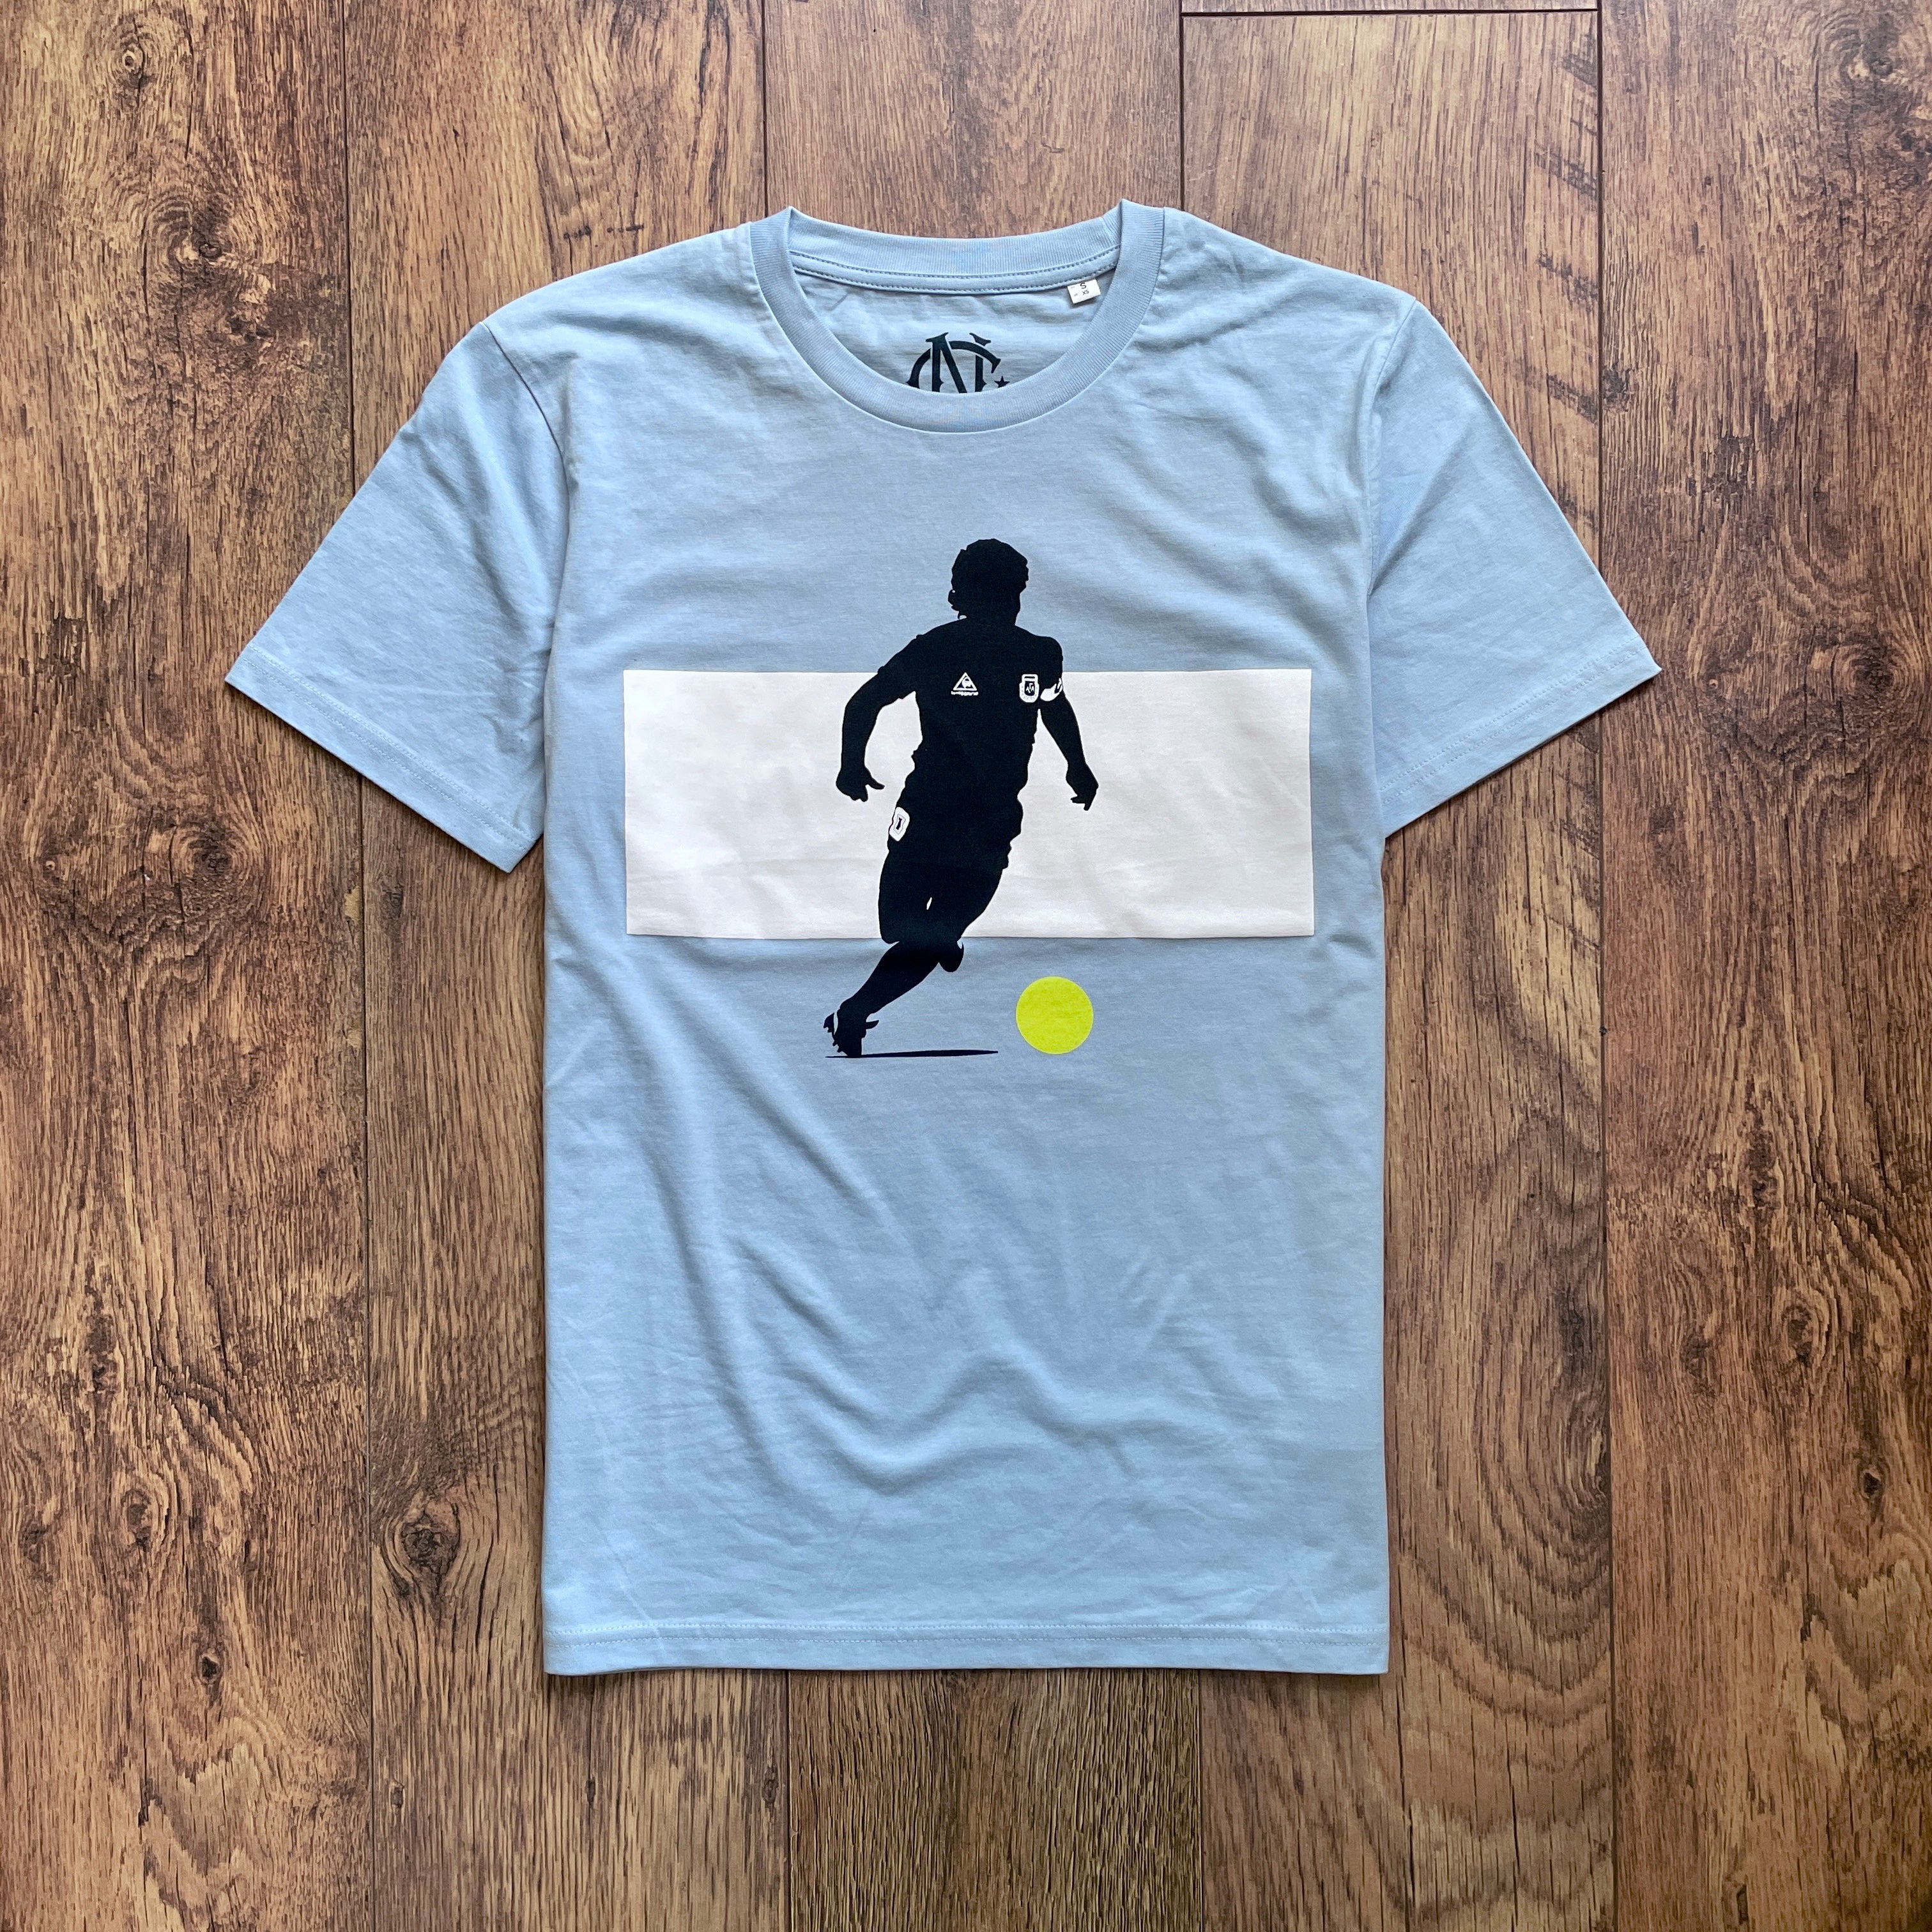 Maradona Argentina 1986 inspired t-shirt - The North Curve - Classic retro football shirt / football top